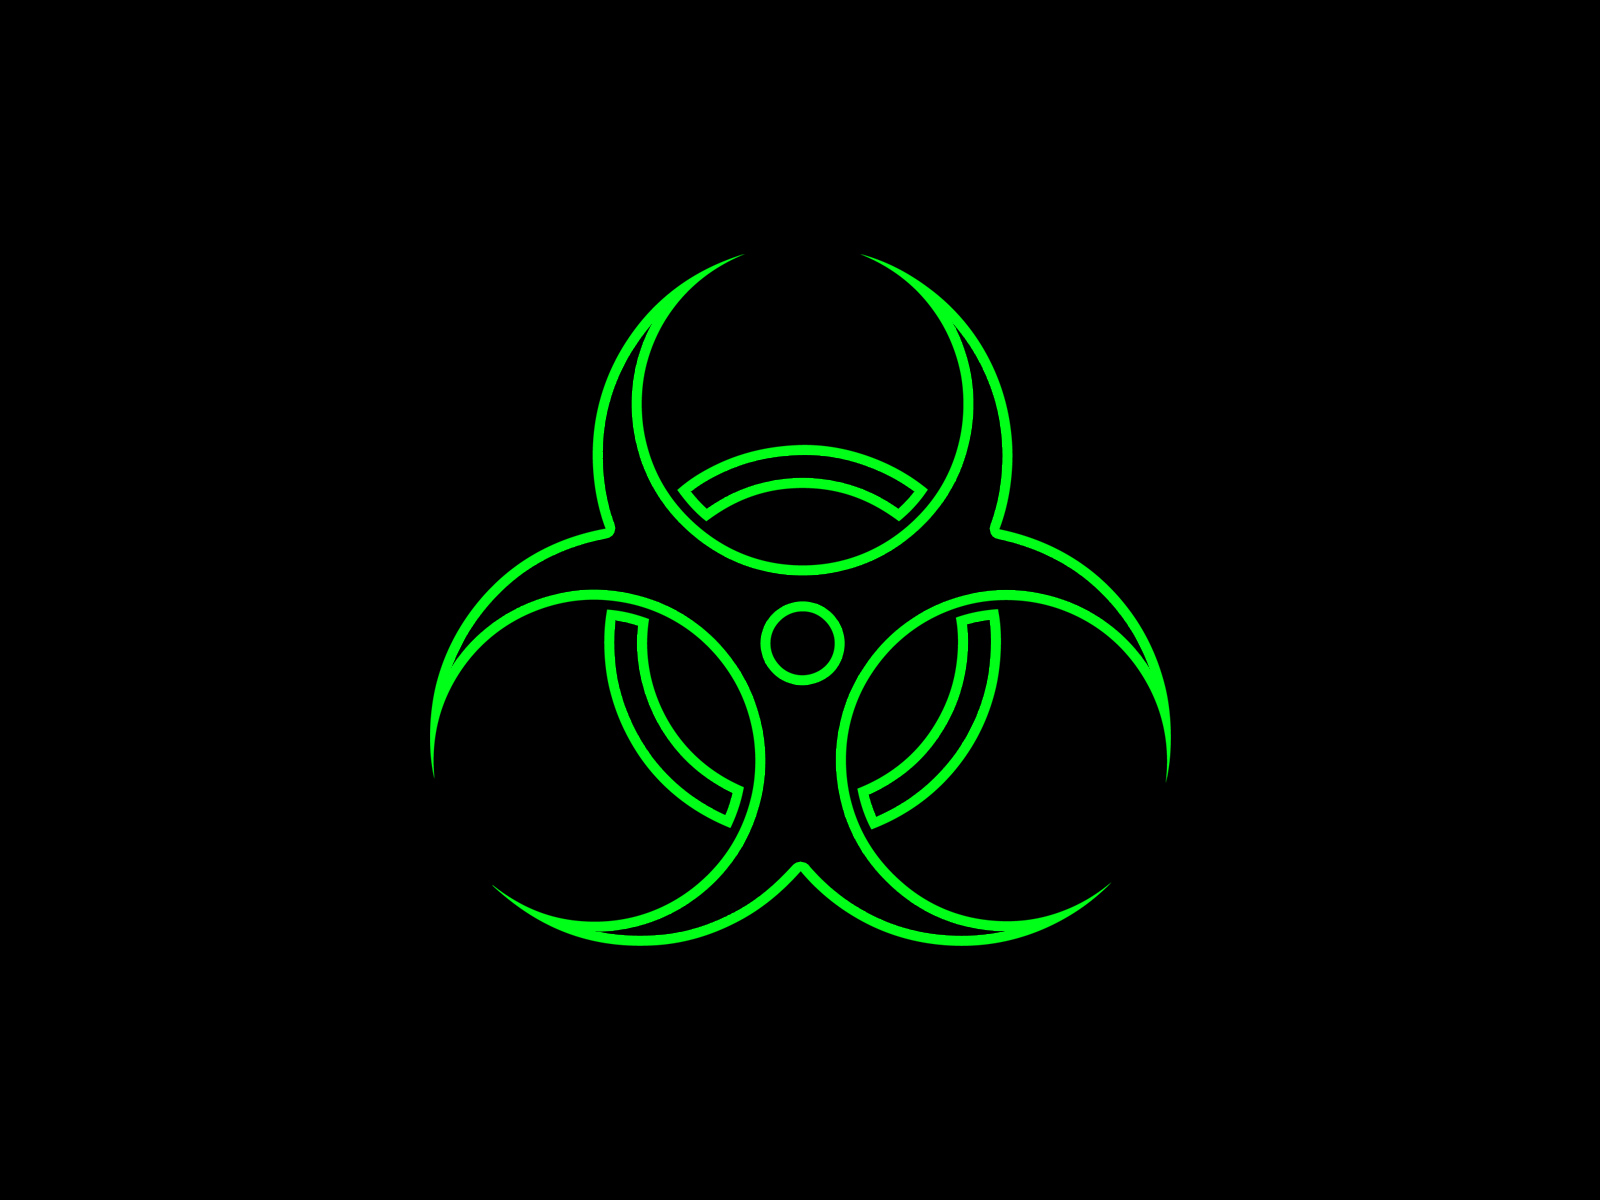 Biohazard Wallpaper Green Image Amp Pictures Becuo